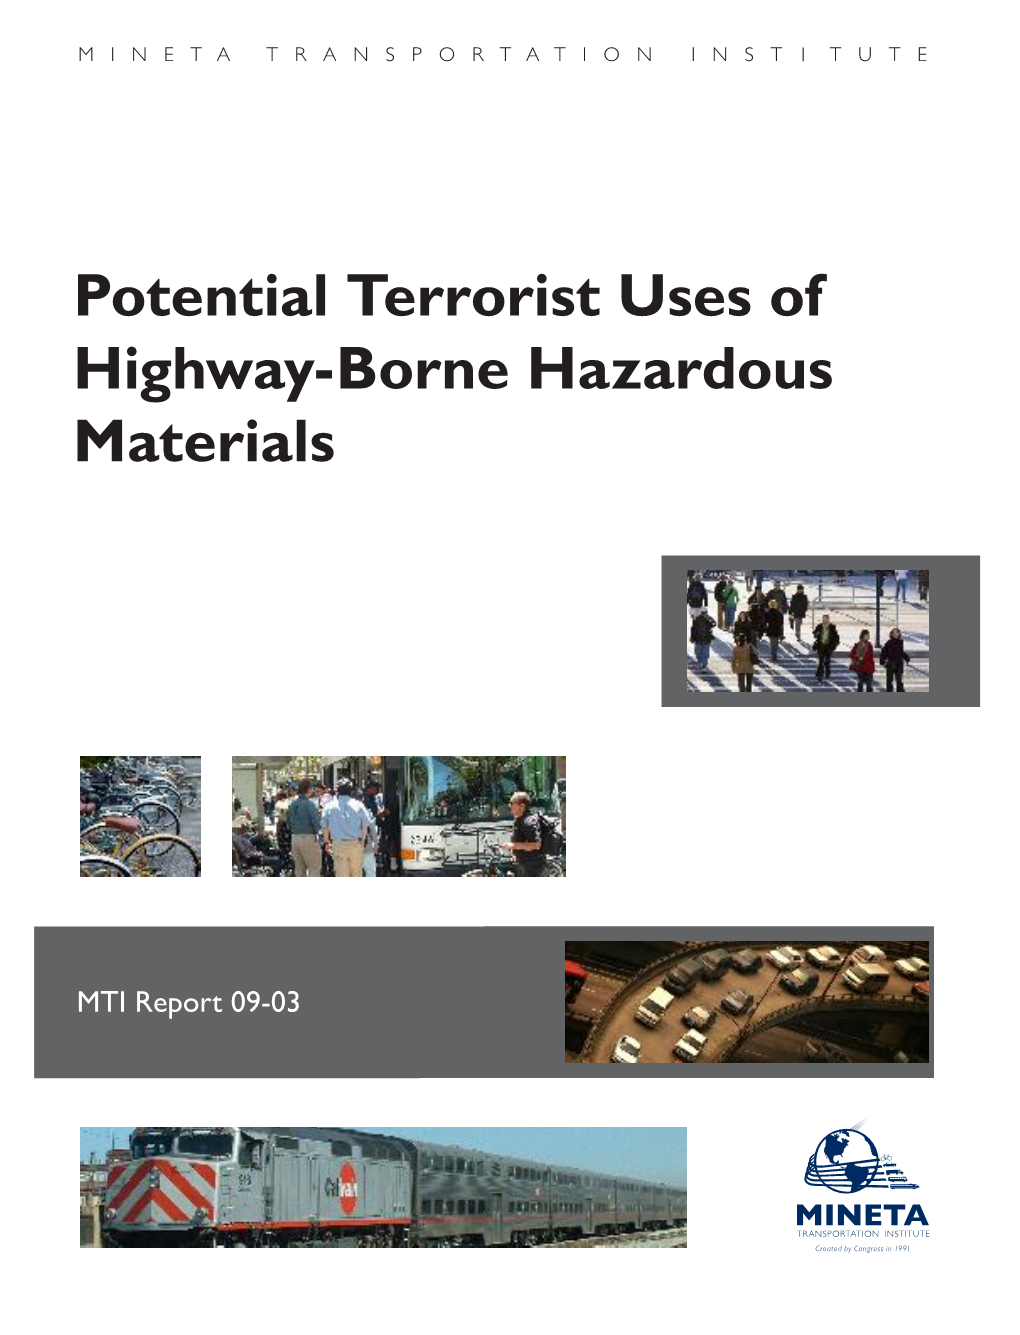 Potential Terrorist Uses of Highway-Borne Hazardous Materials Terroristpotential Hazardous of Highway-Borne Uses